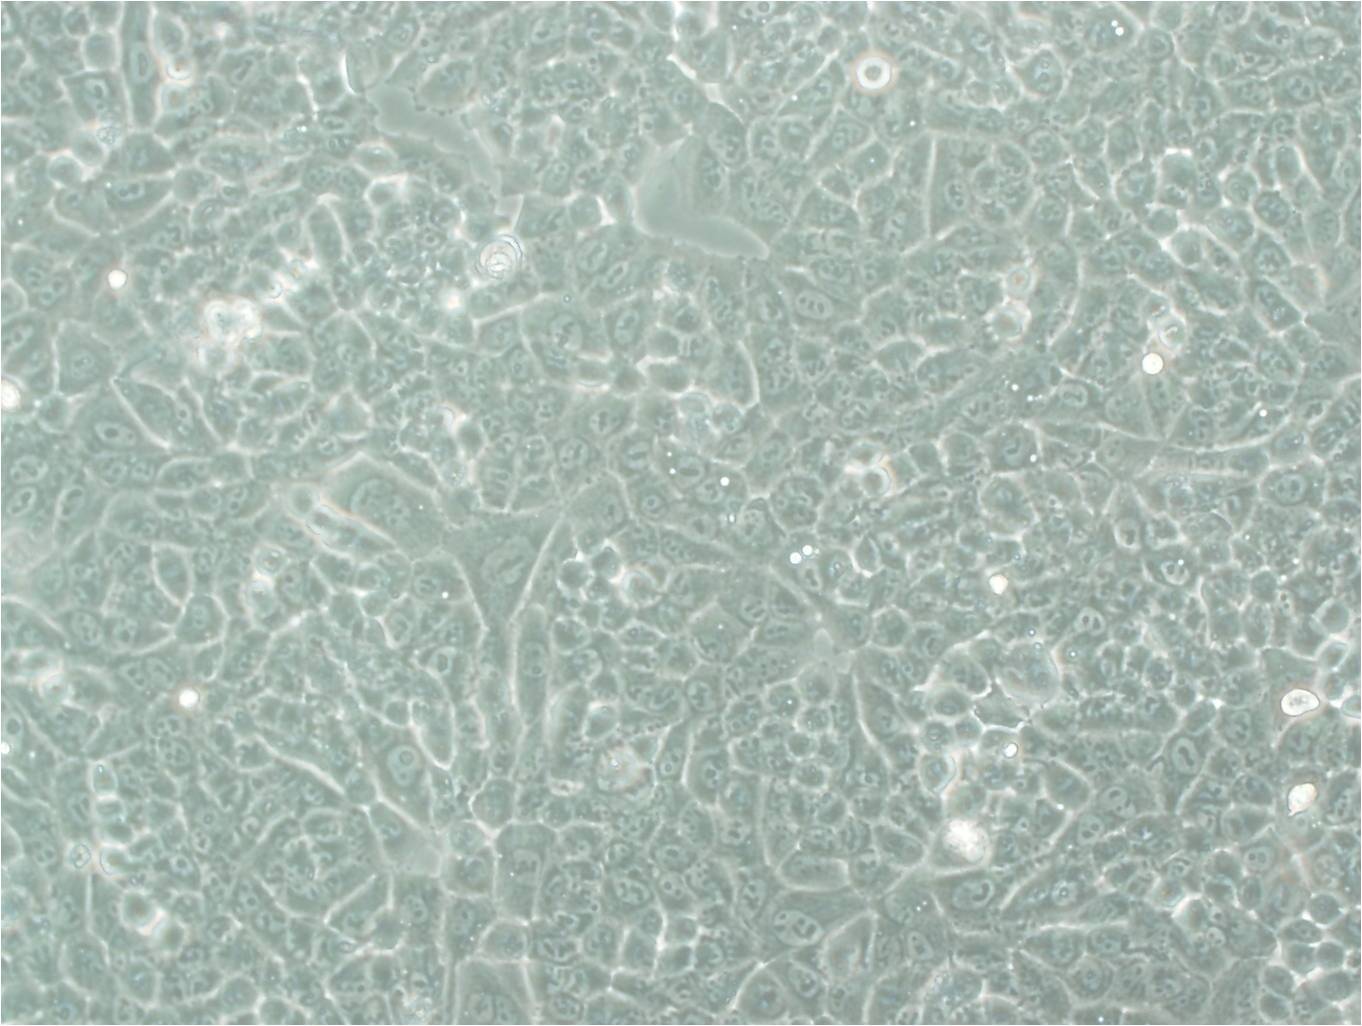 NCI-H1819 Cells|人肺癌可传代细胞系